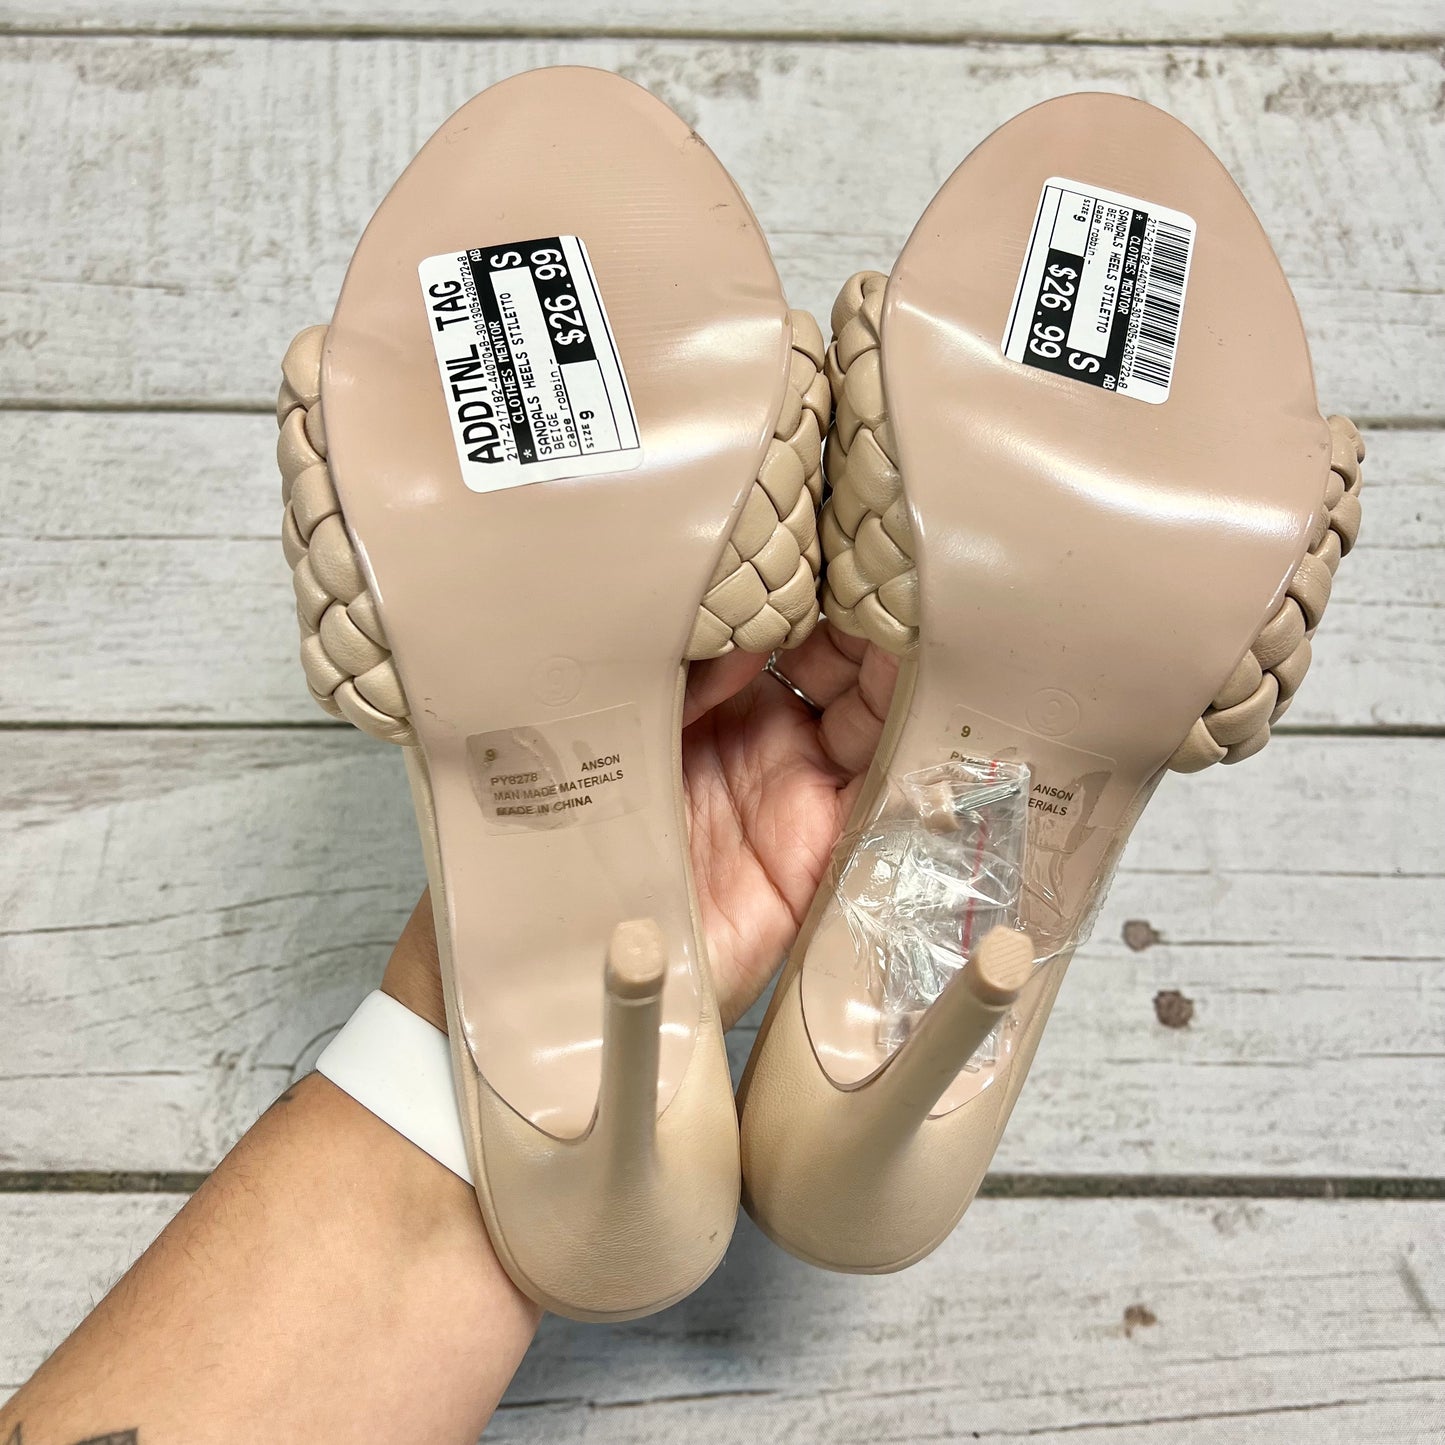 Sandals Heels Stiletto By Cape Robbin  Size: 9